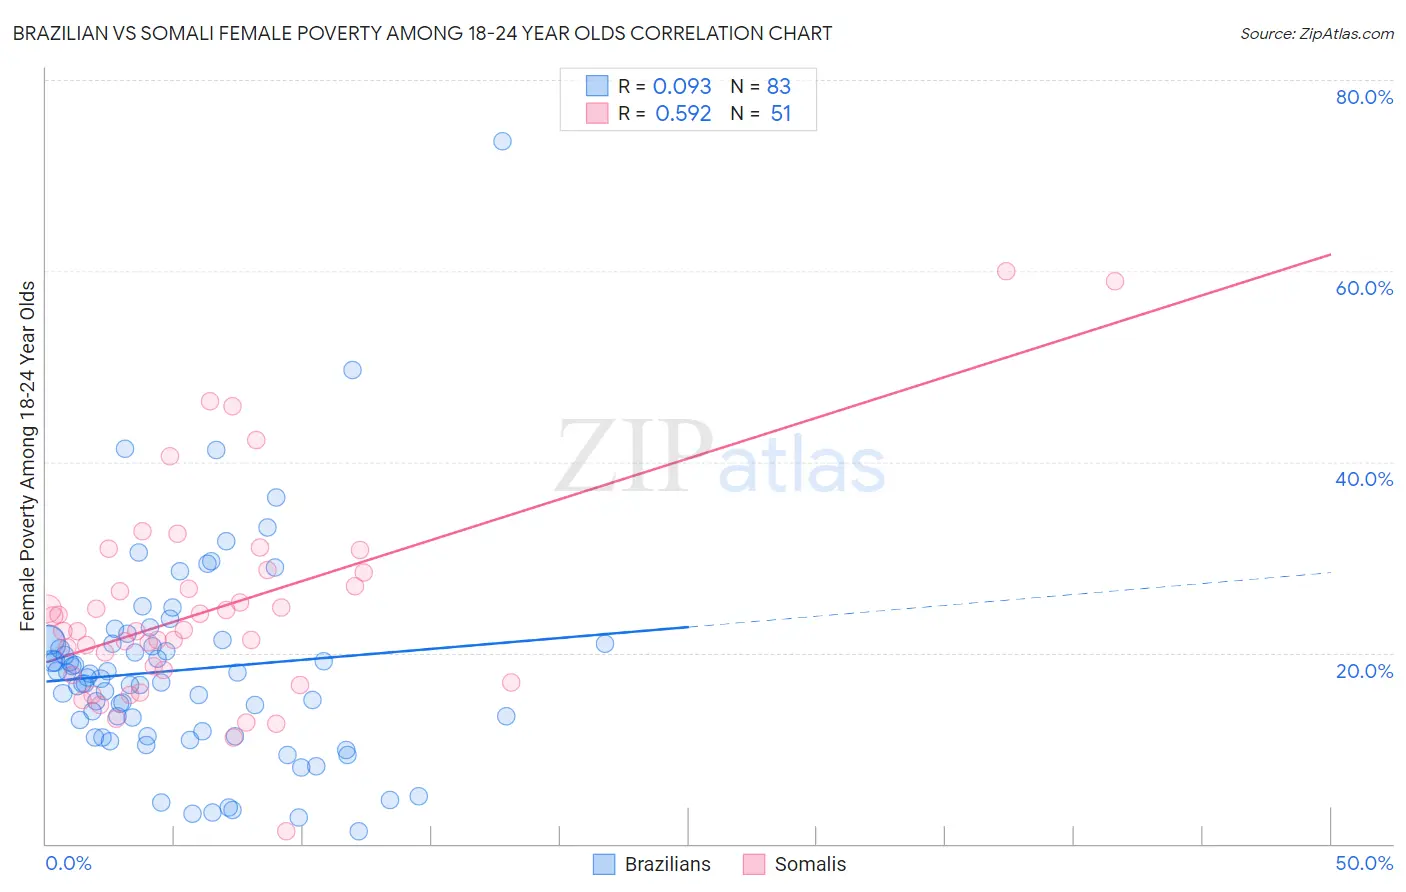 Brazilian vs Somali Female Poverty Among 18-24 Year Olds